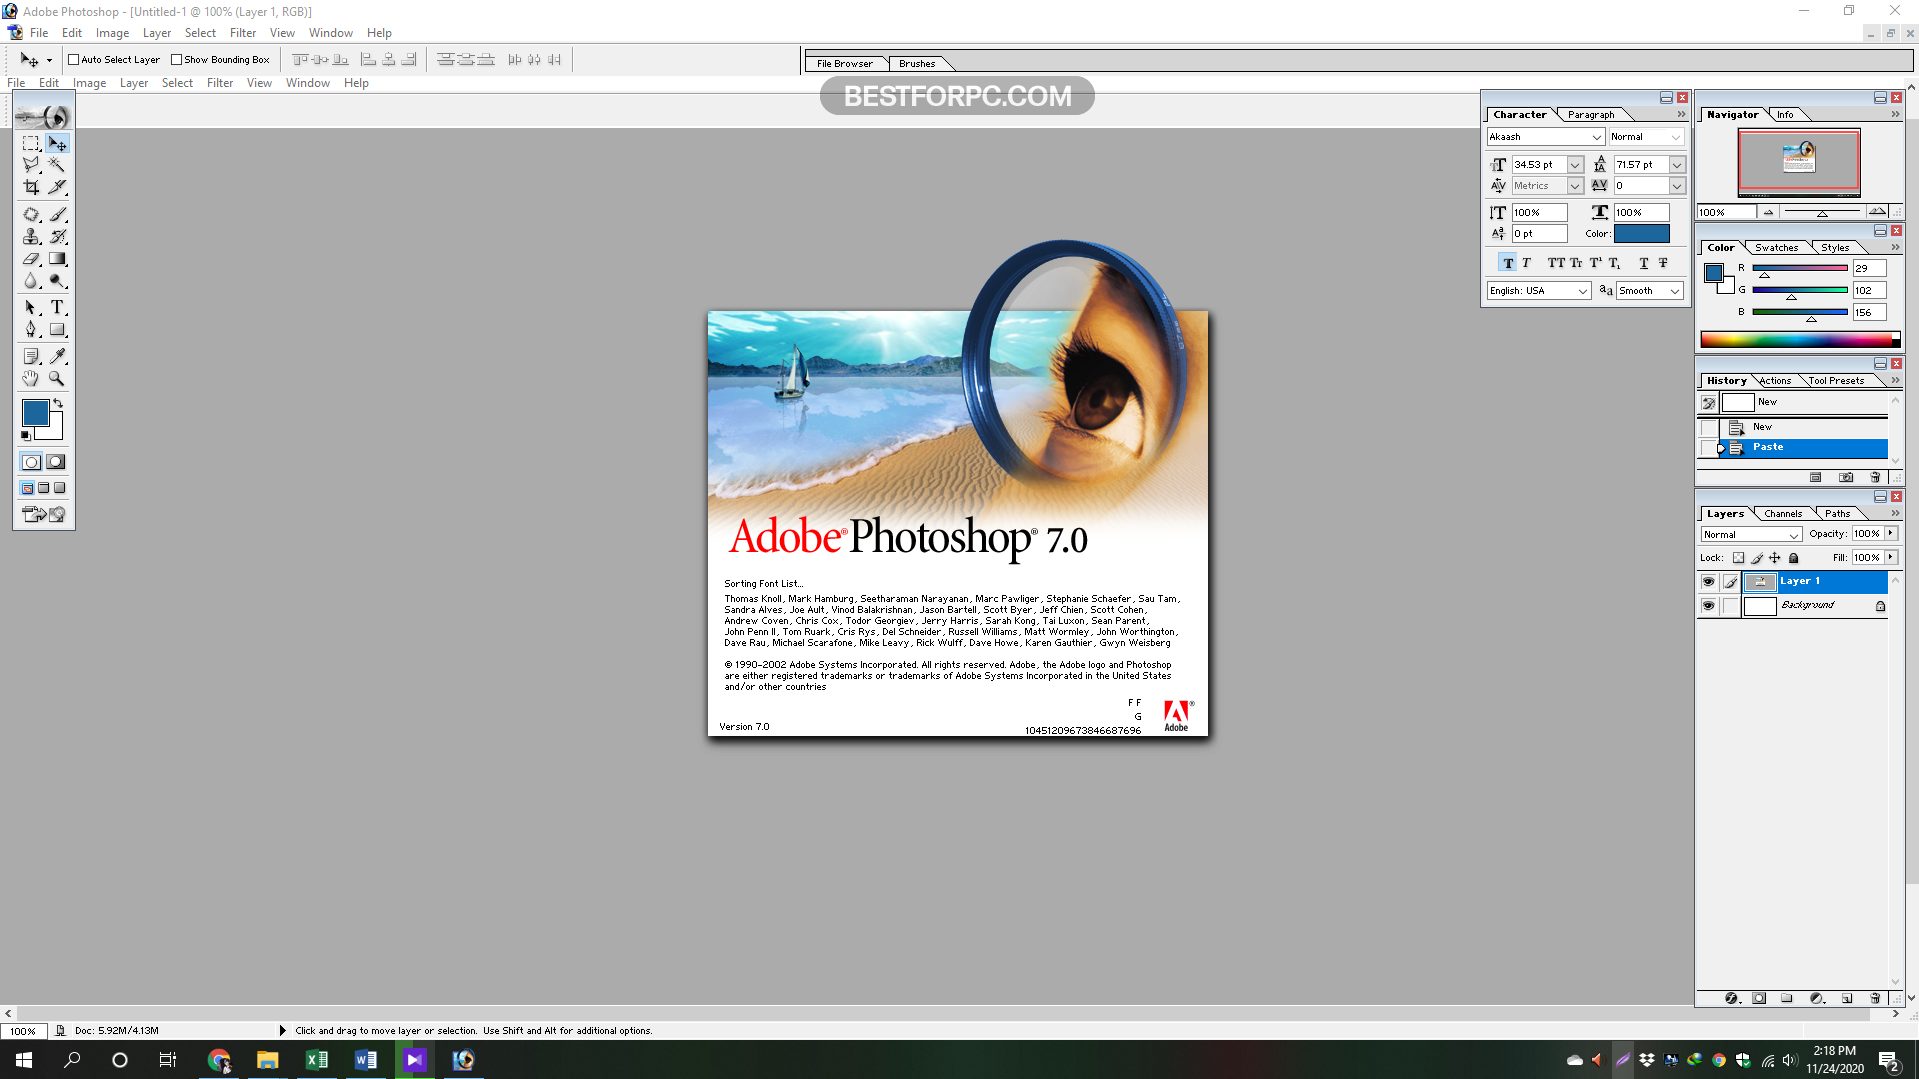 adobe photoshop 7.0 software download free